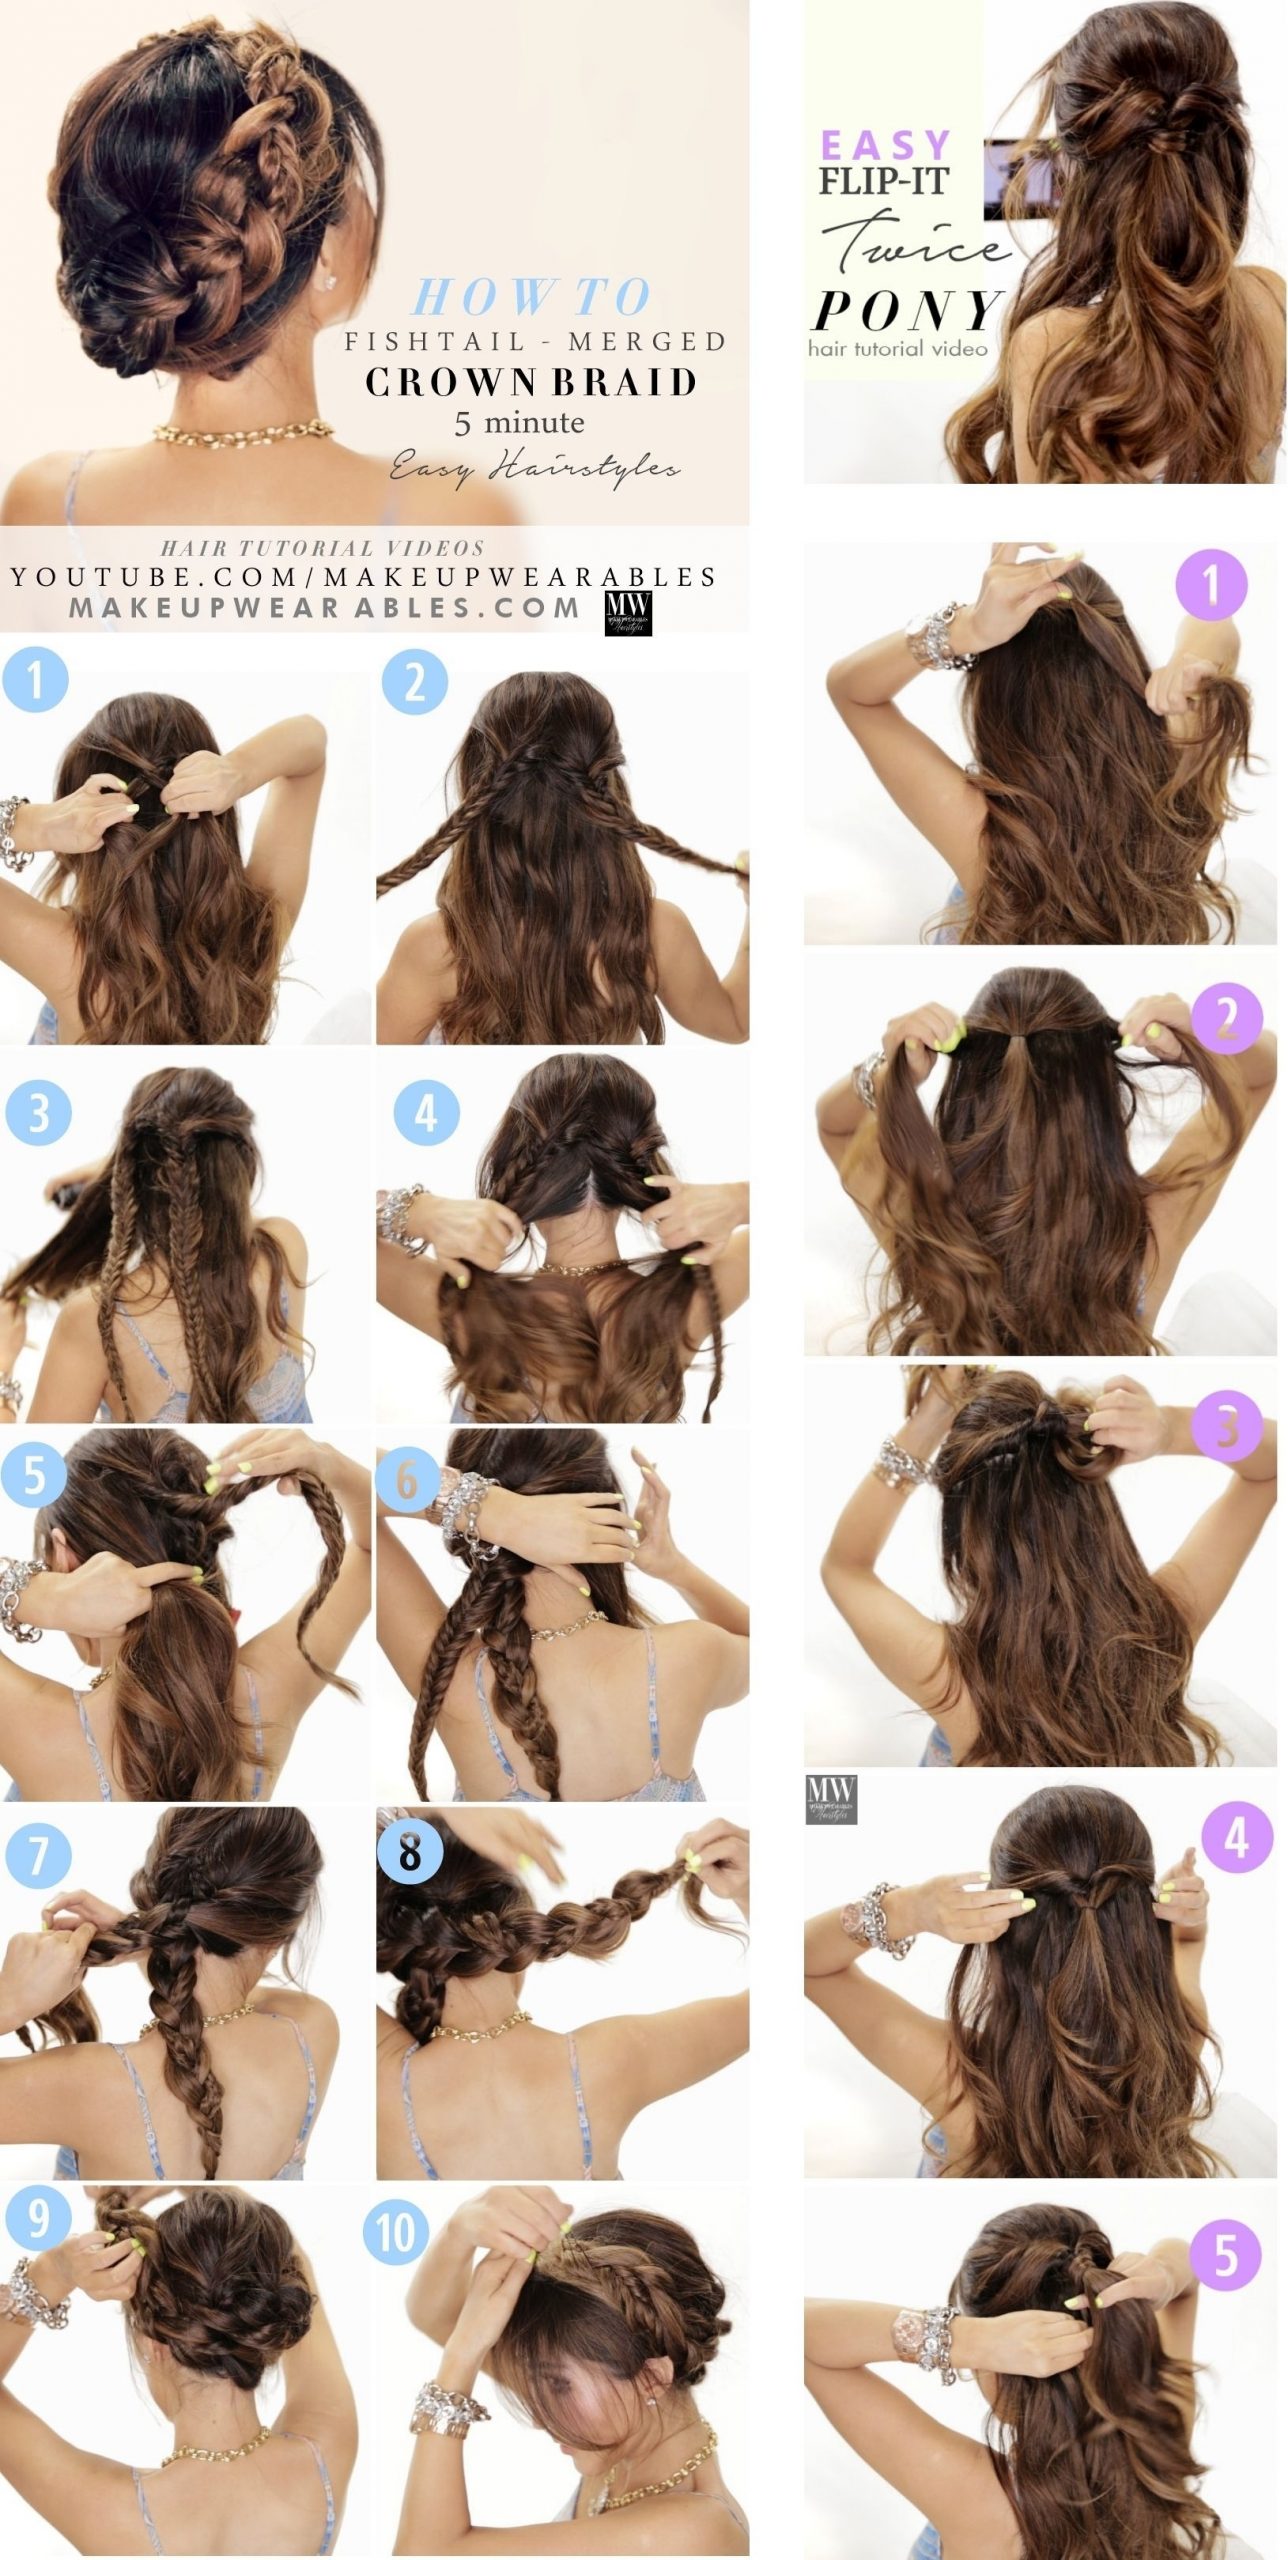 3 Easy #hairstyles With Merged #braids | #hair Tutorial regarding Indian Hairstyle Step By Step